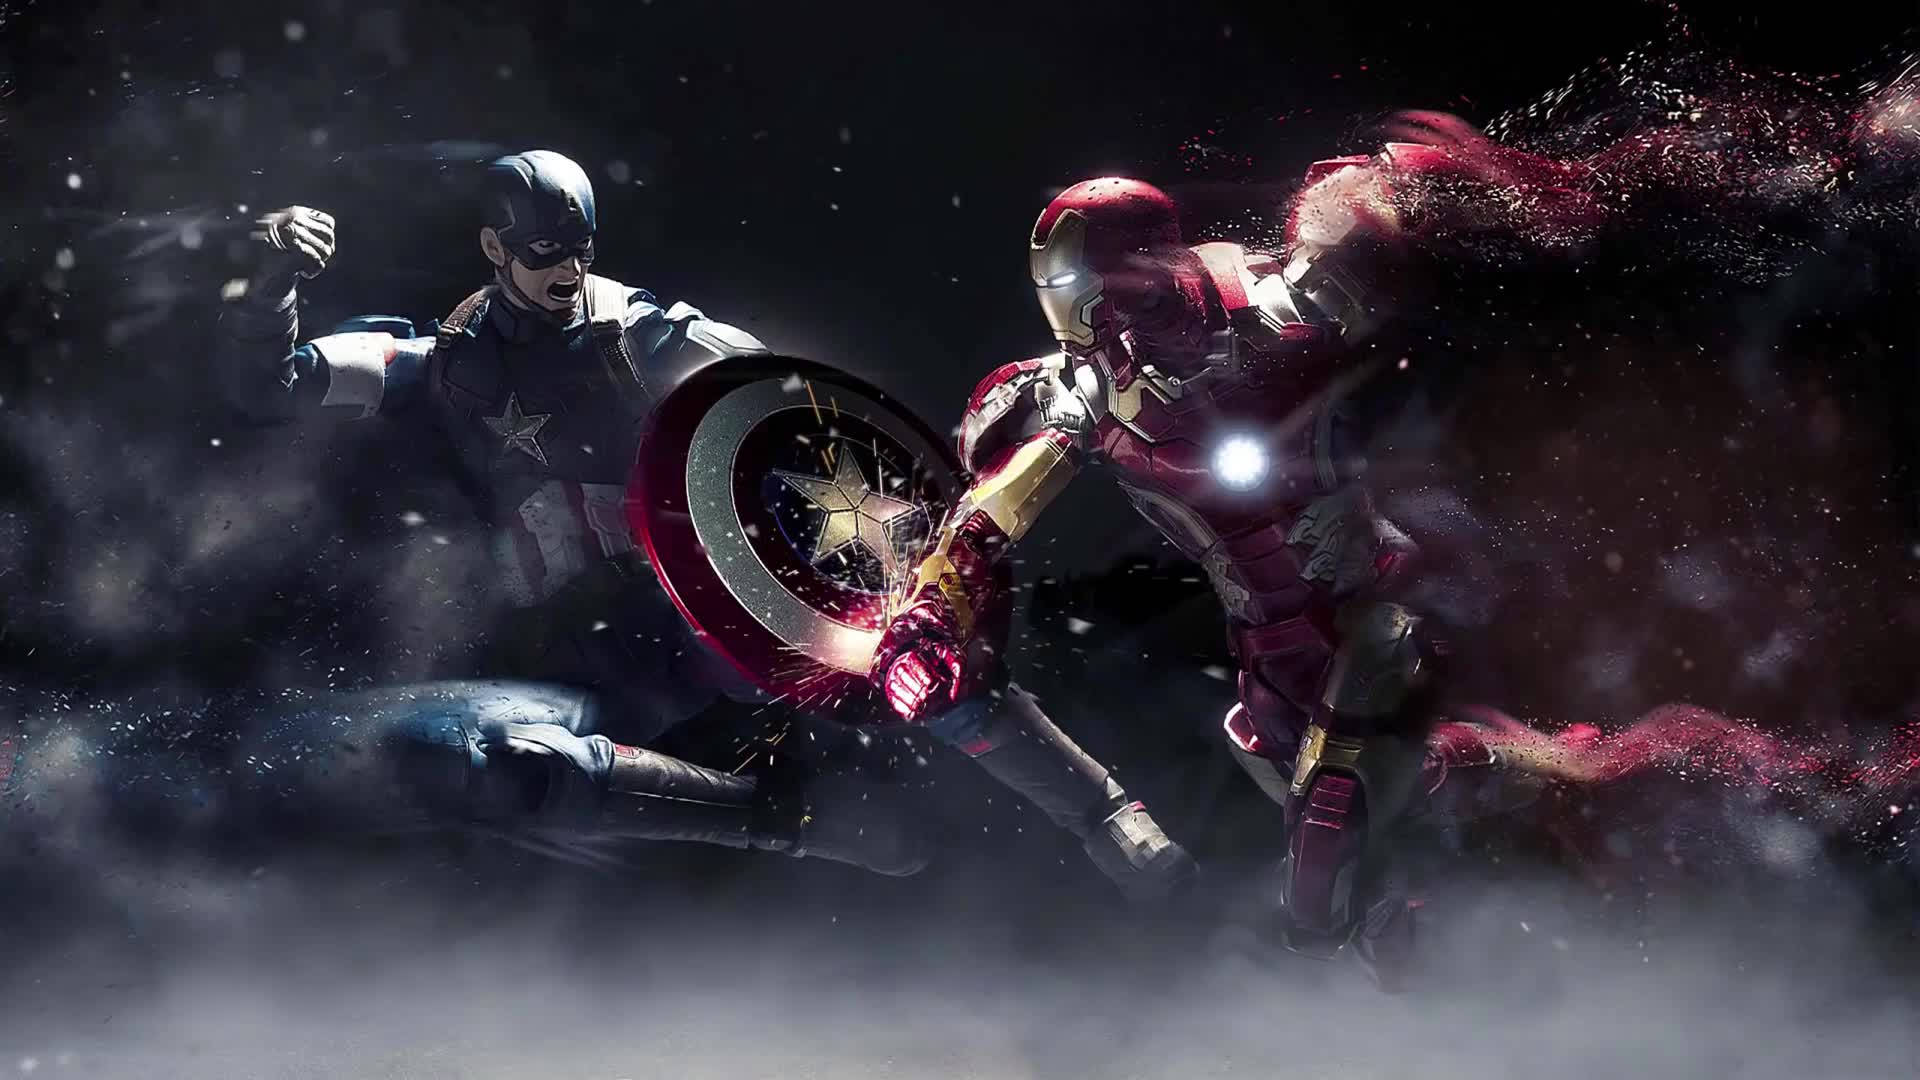 Captain America Iron Man Full Hd Wallpaper